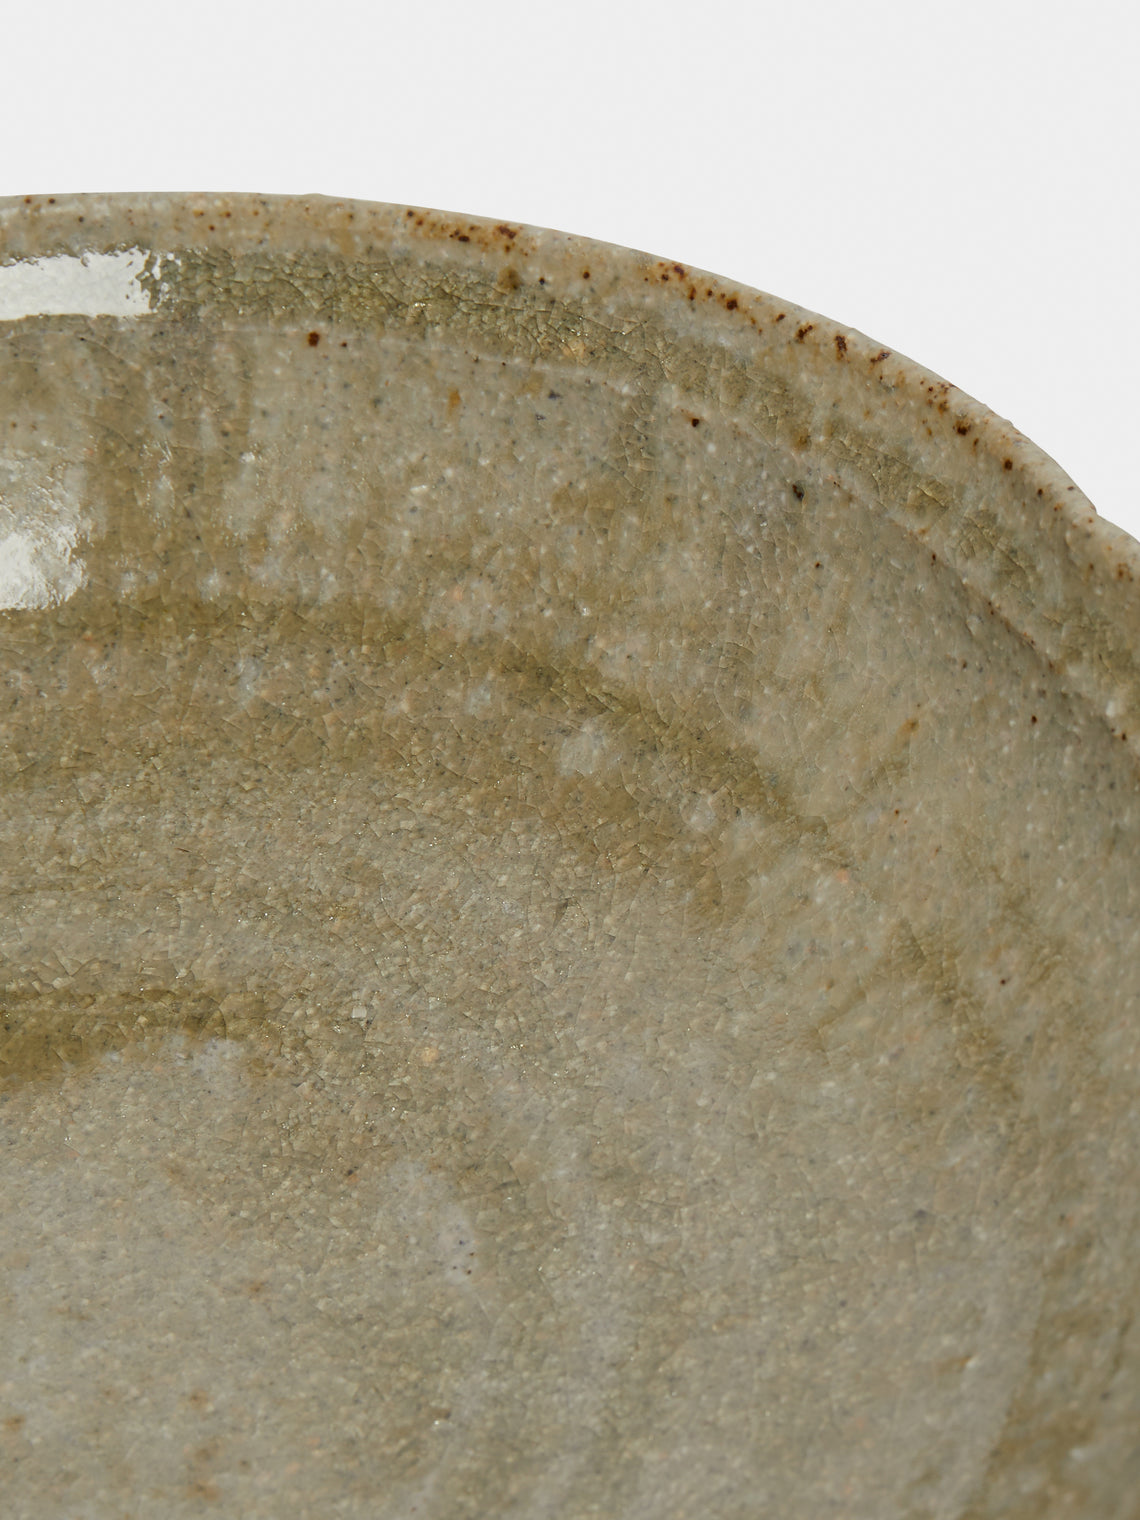 Ingot Objects - Ash-Glazed Ceramic Small Dish - Beige - ABASK